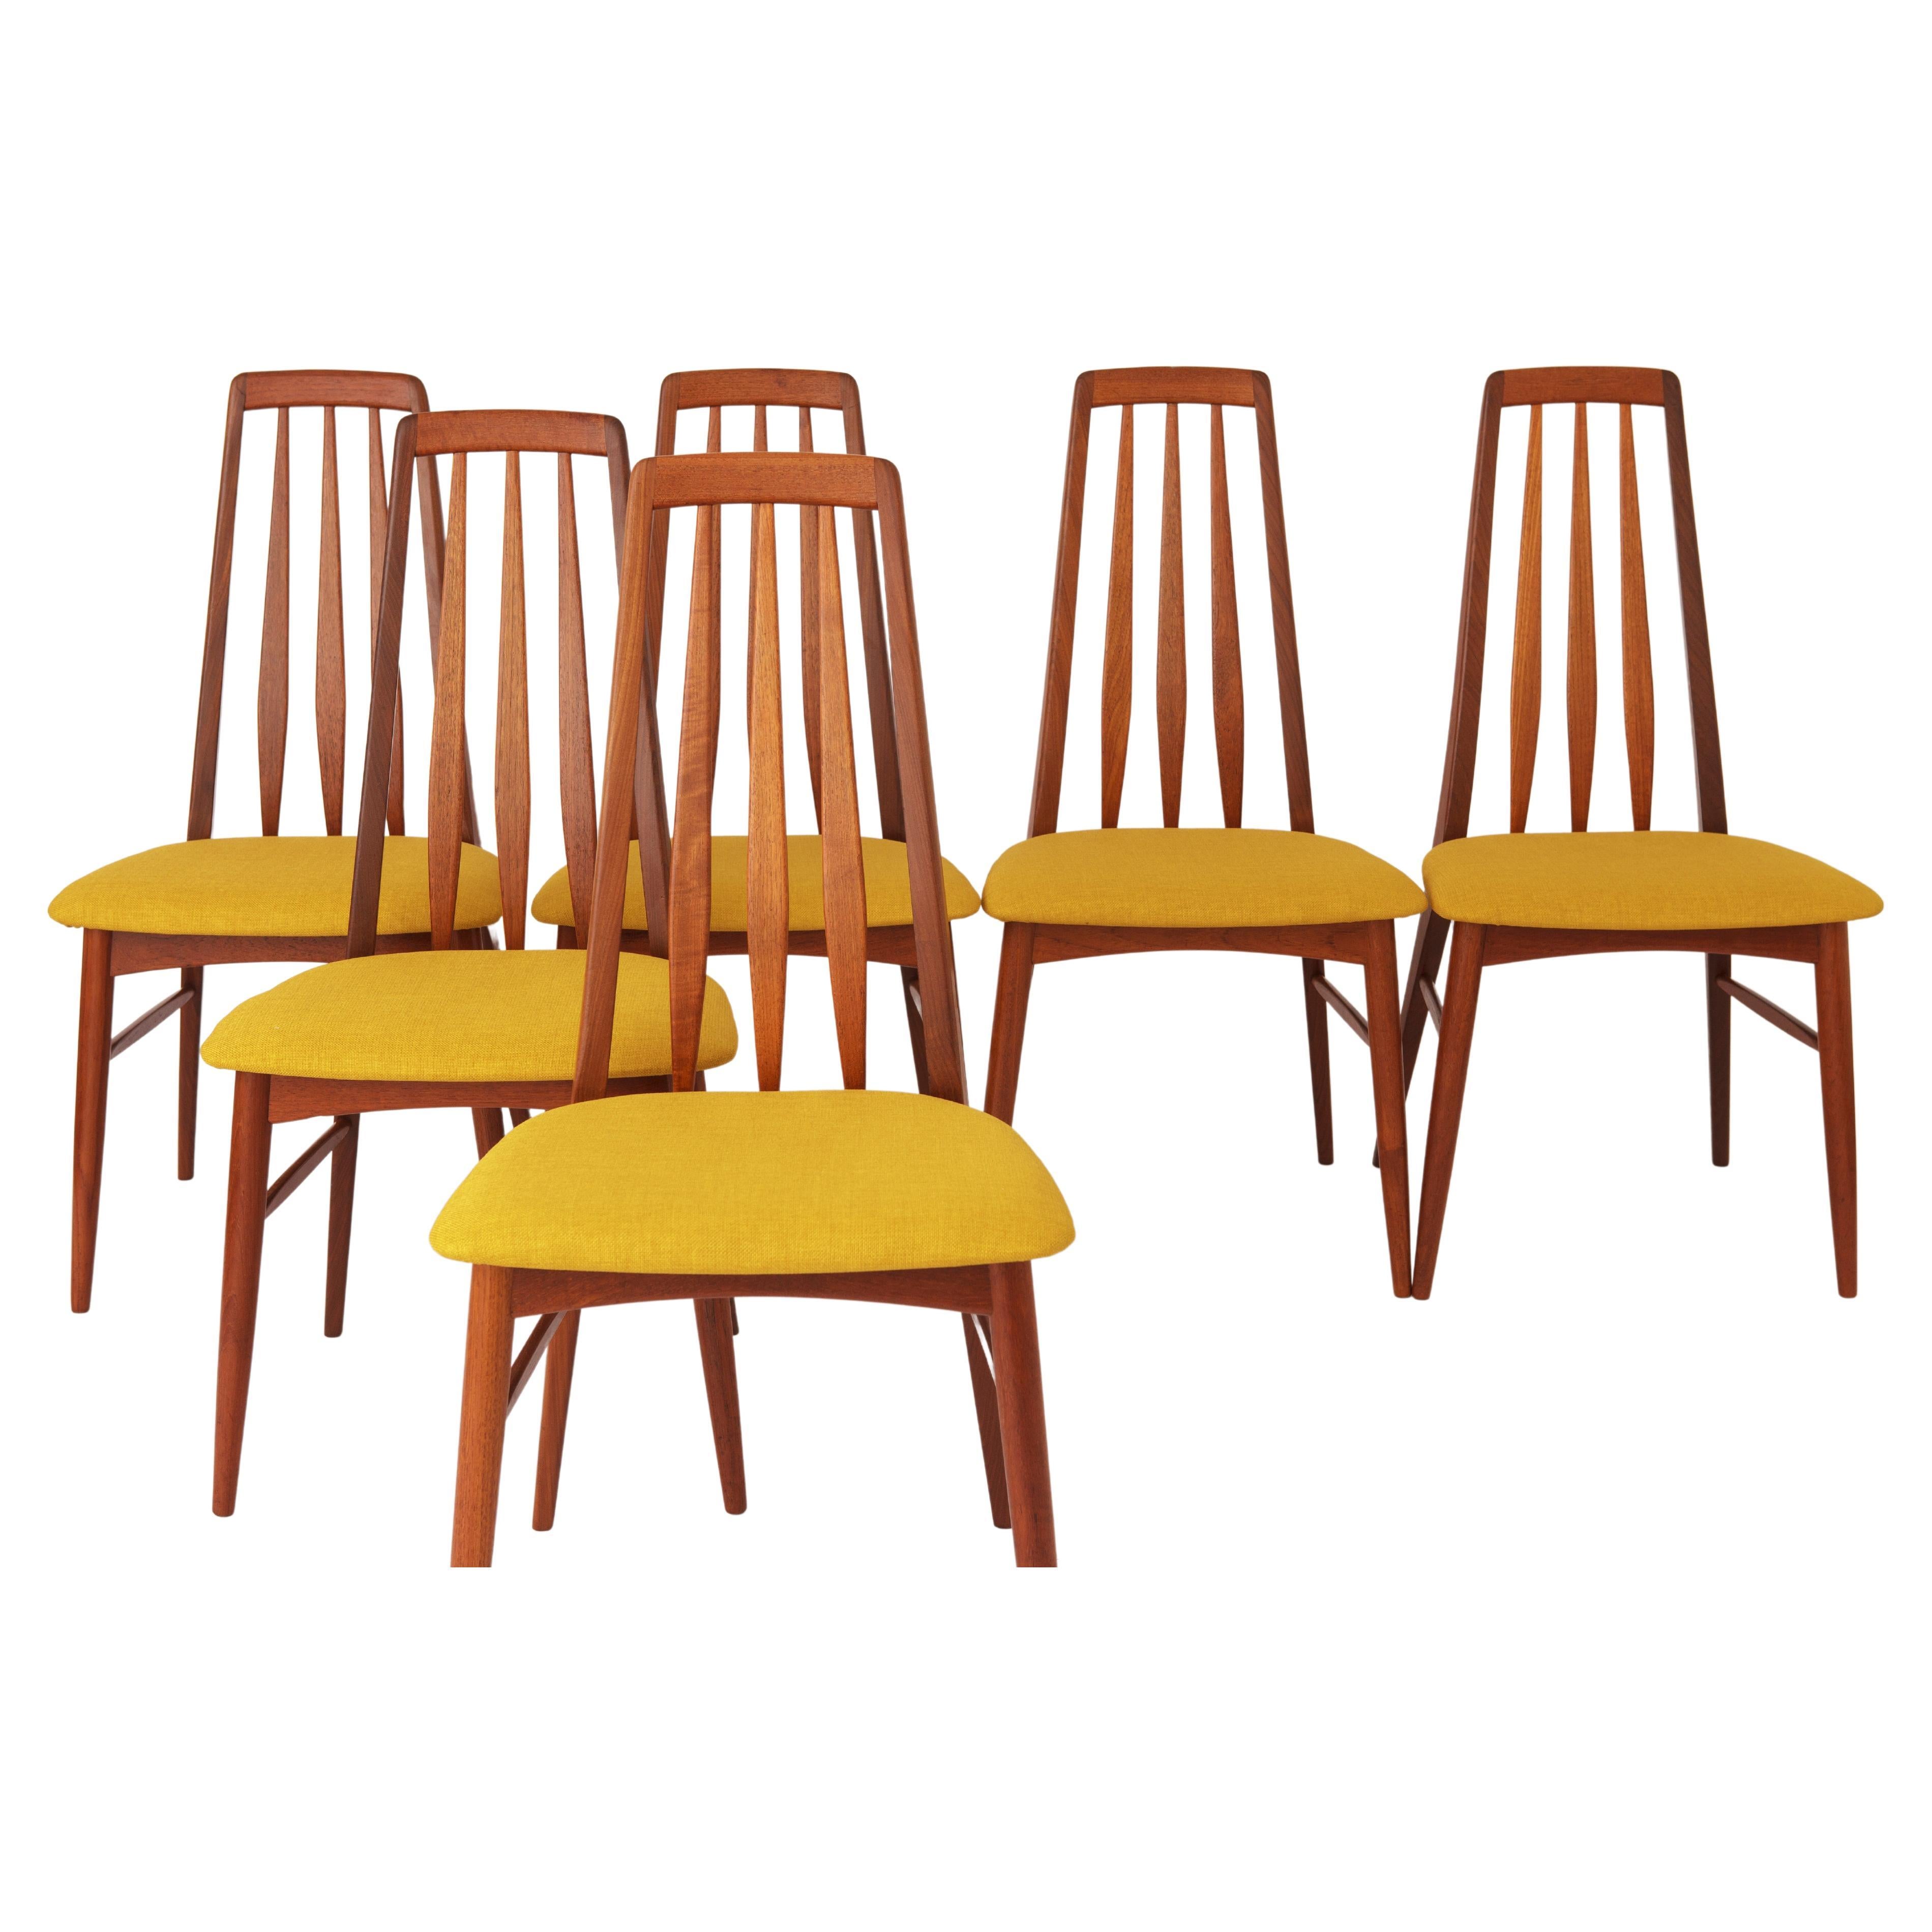 6 Niels Koefoed Dining Chairs Eva, 1960s Vintage - Set of 6 For Sale